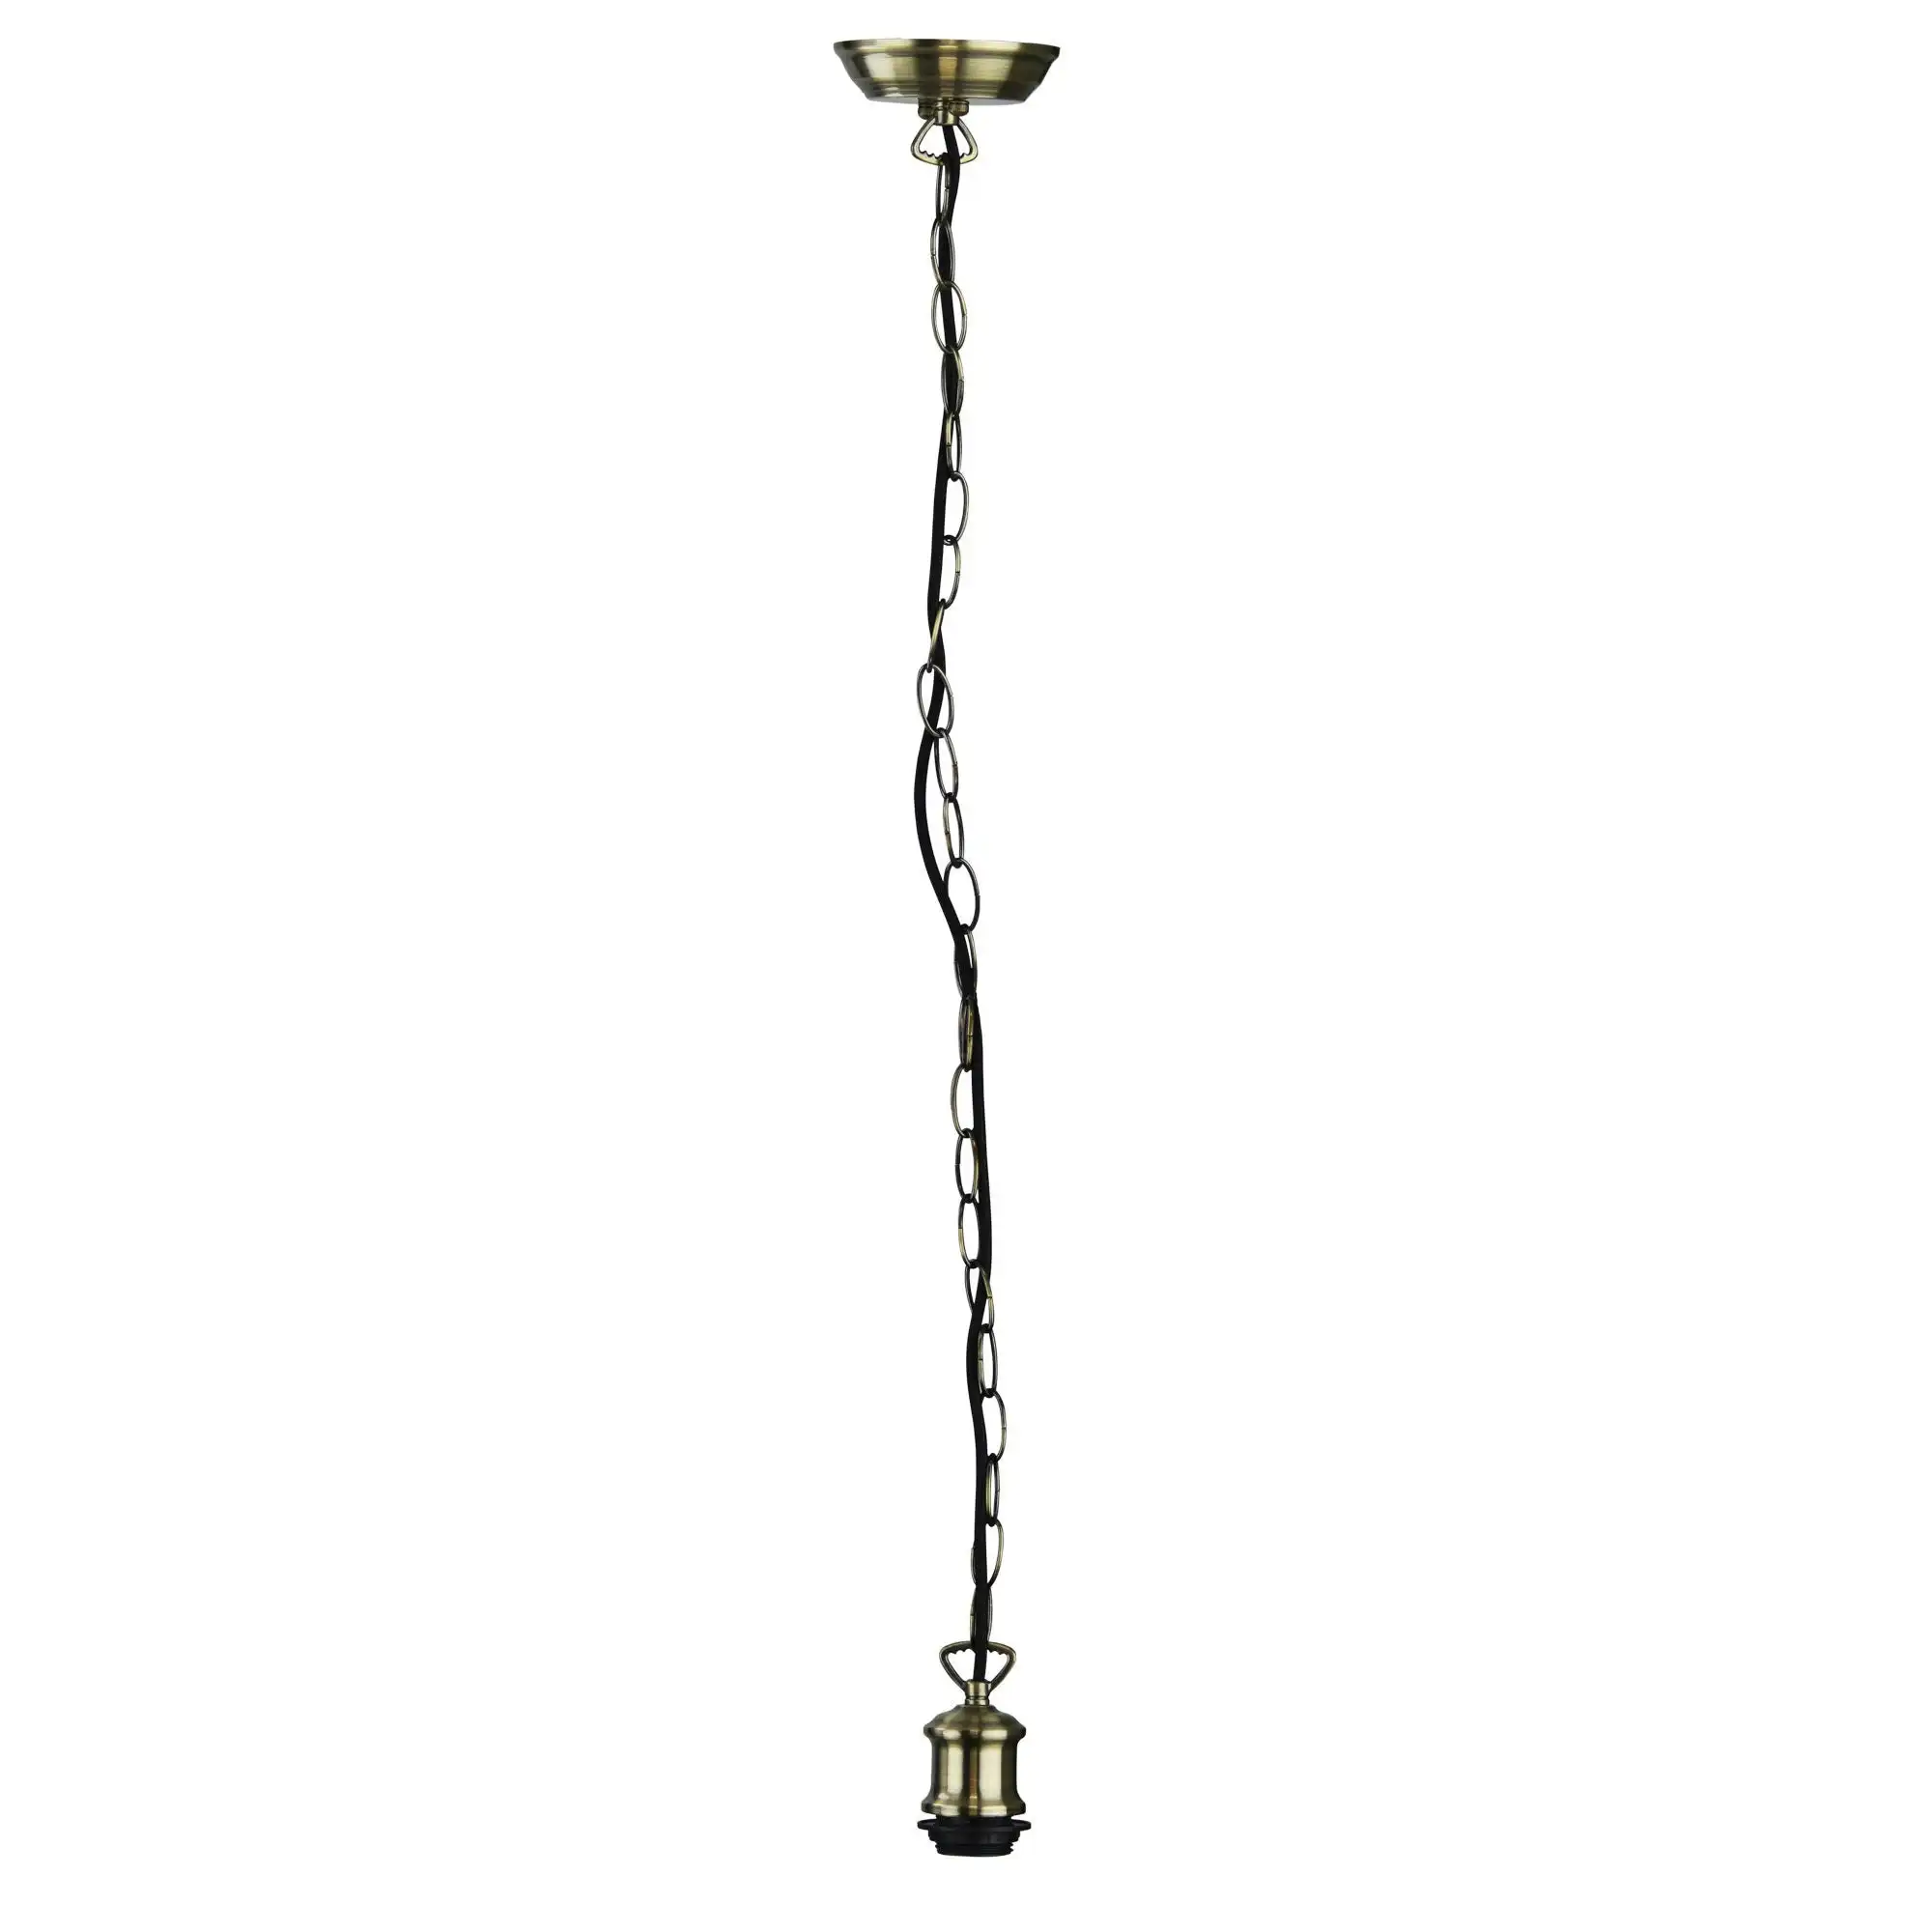 ALBANY CHAIN Pendant Light 170cm Vintage Chain Suspension Antique Brass